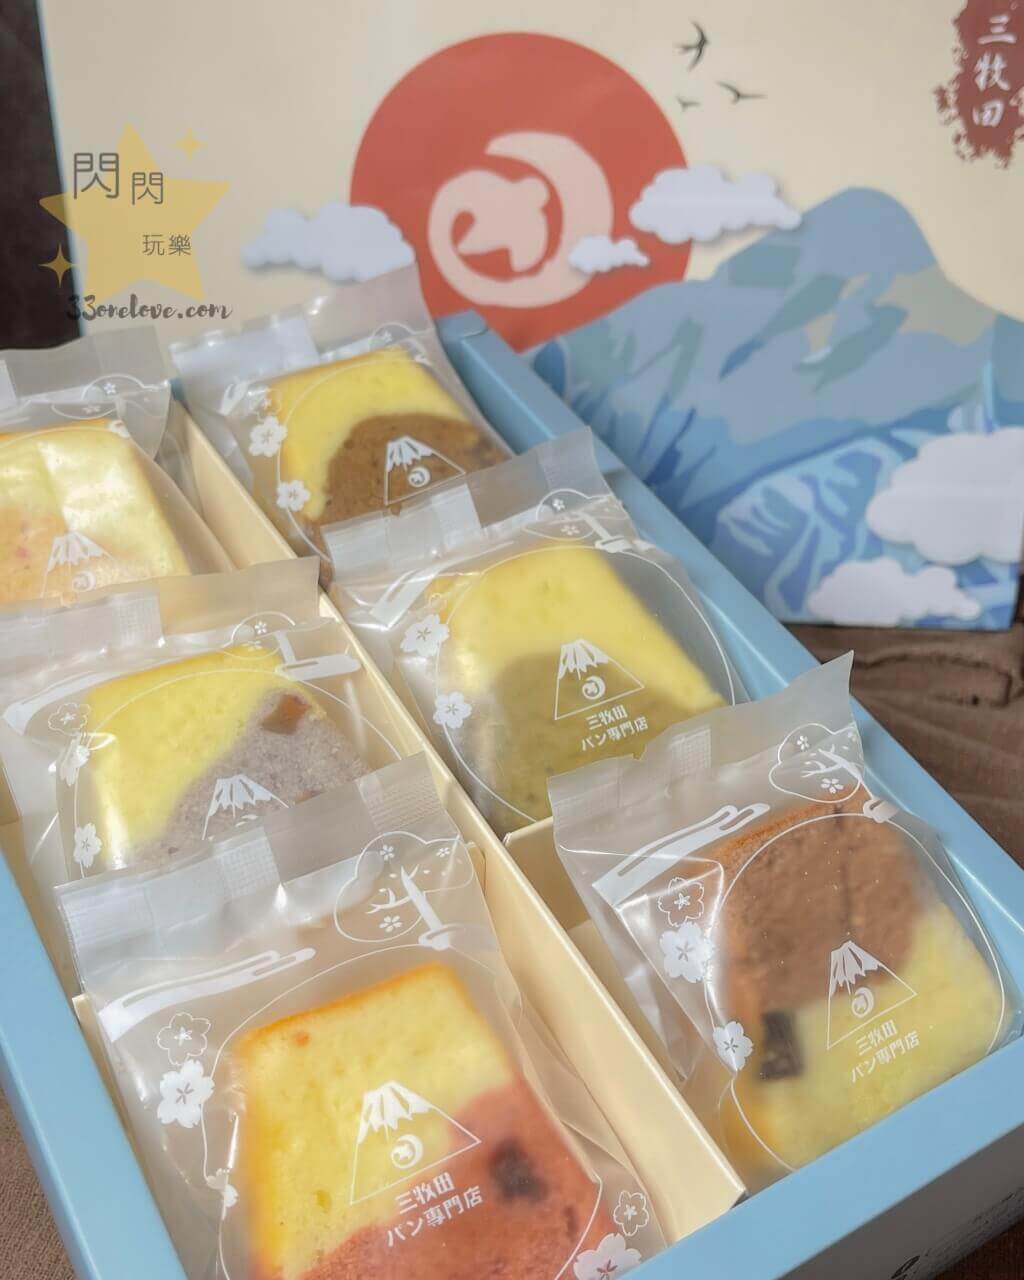 SANMAKITA Bakery三牧田麵包專門店